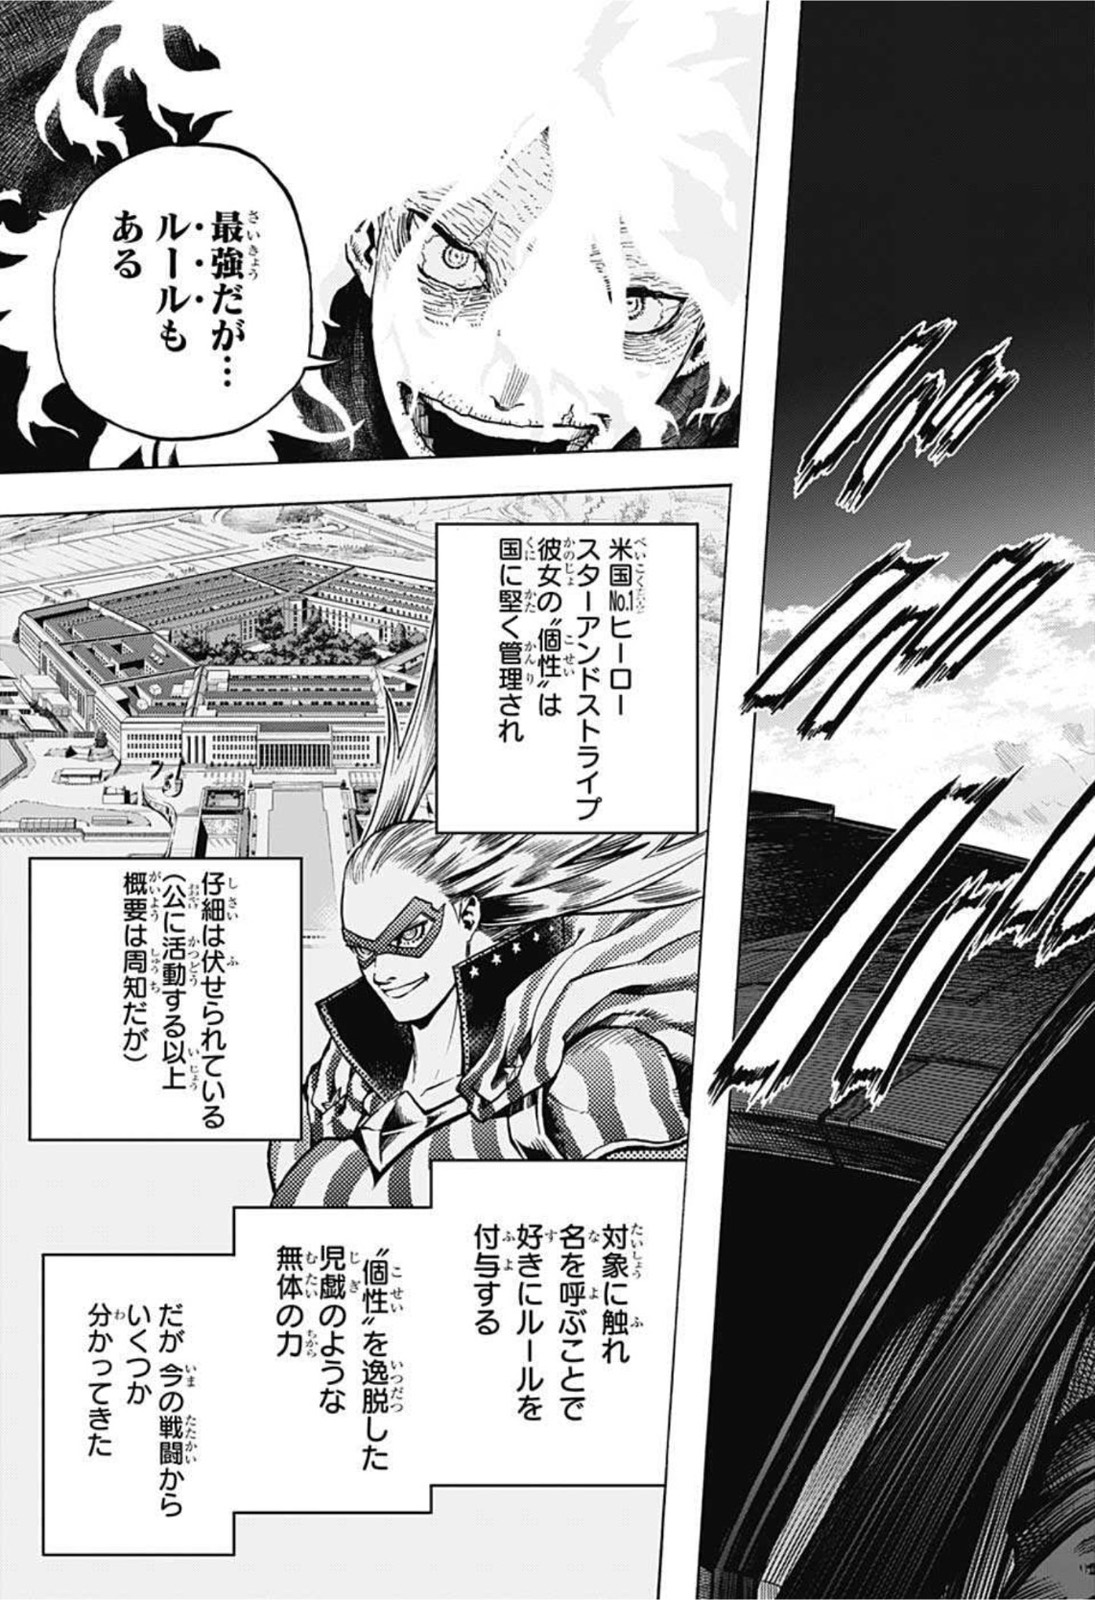 Boku no Hero Academia - Chapter 331 - Page 3